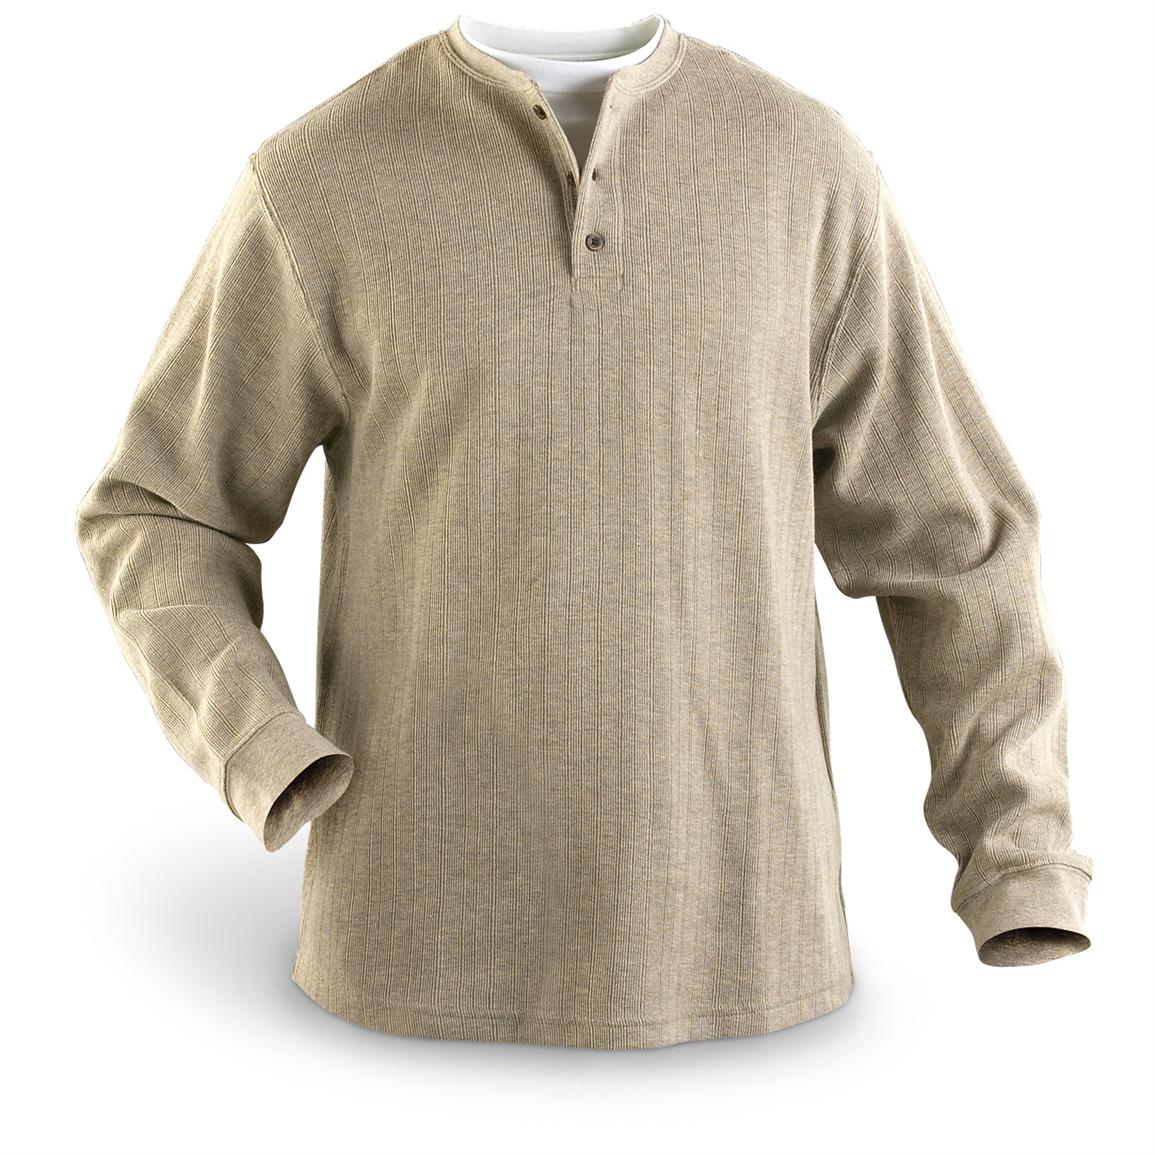 Haggar® Drop Needle Henley - 143009, Shirts at Sportsman's Guide